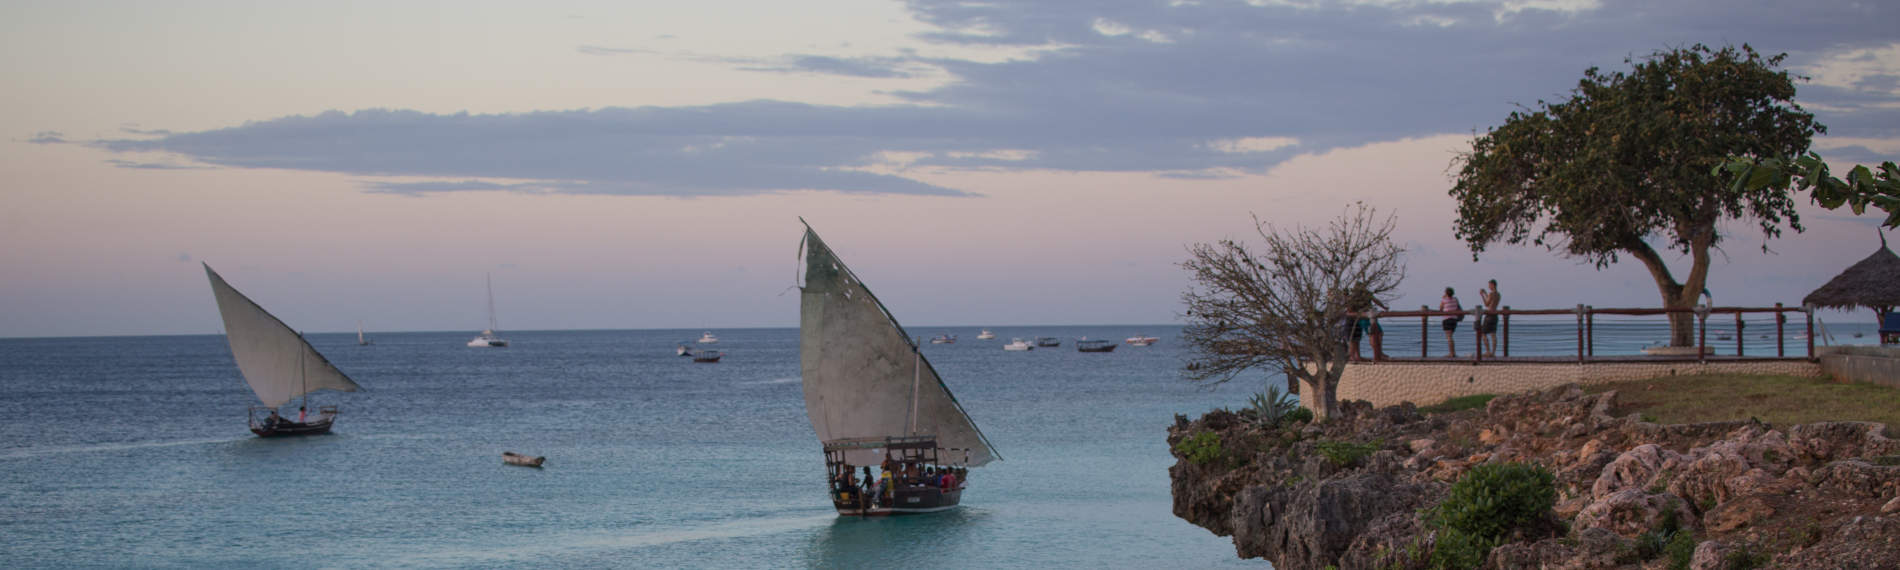 Tansania - Zanzibar - East Africa Diving, Header